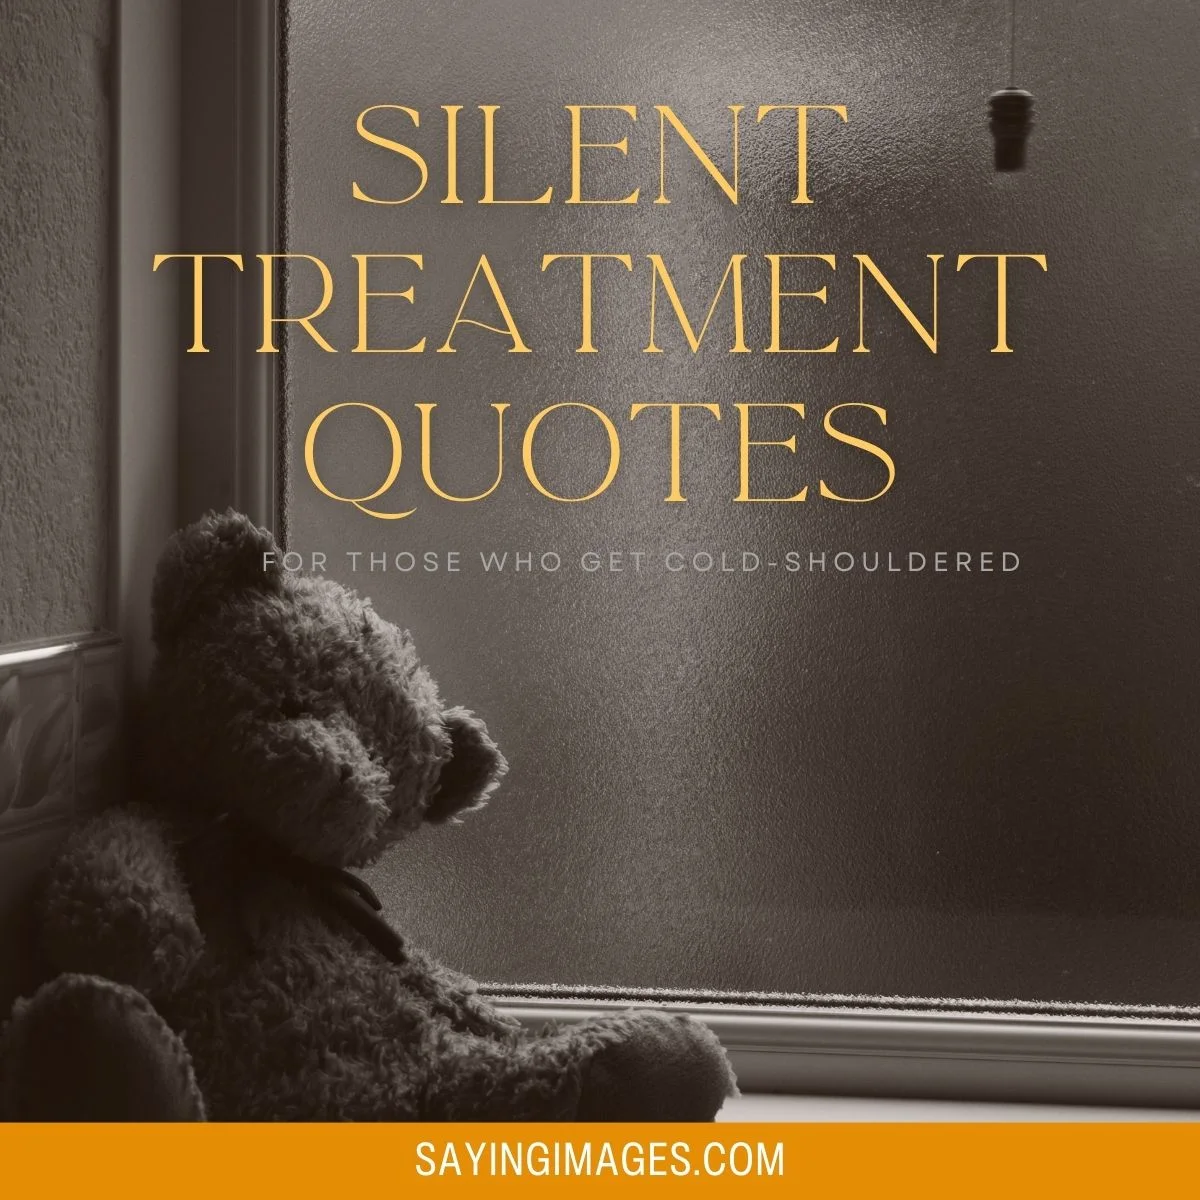 Silent Treatment Quotes